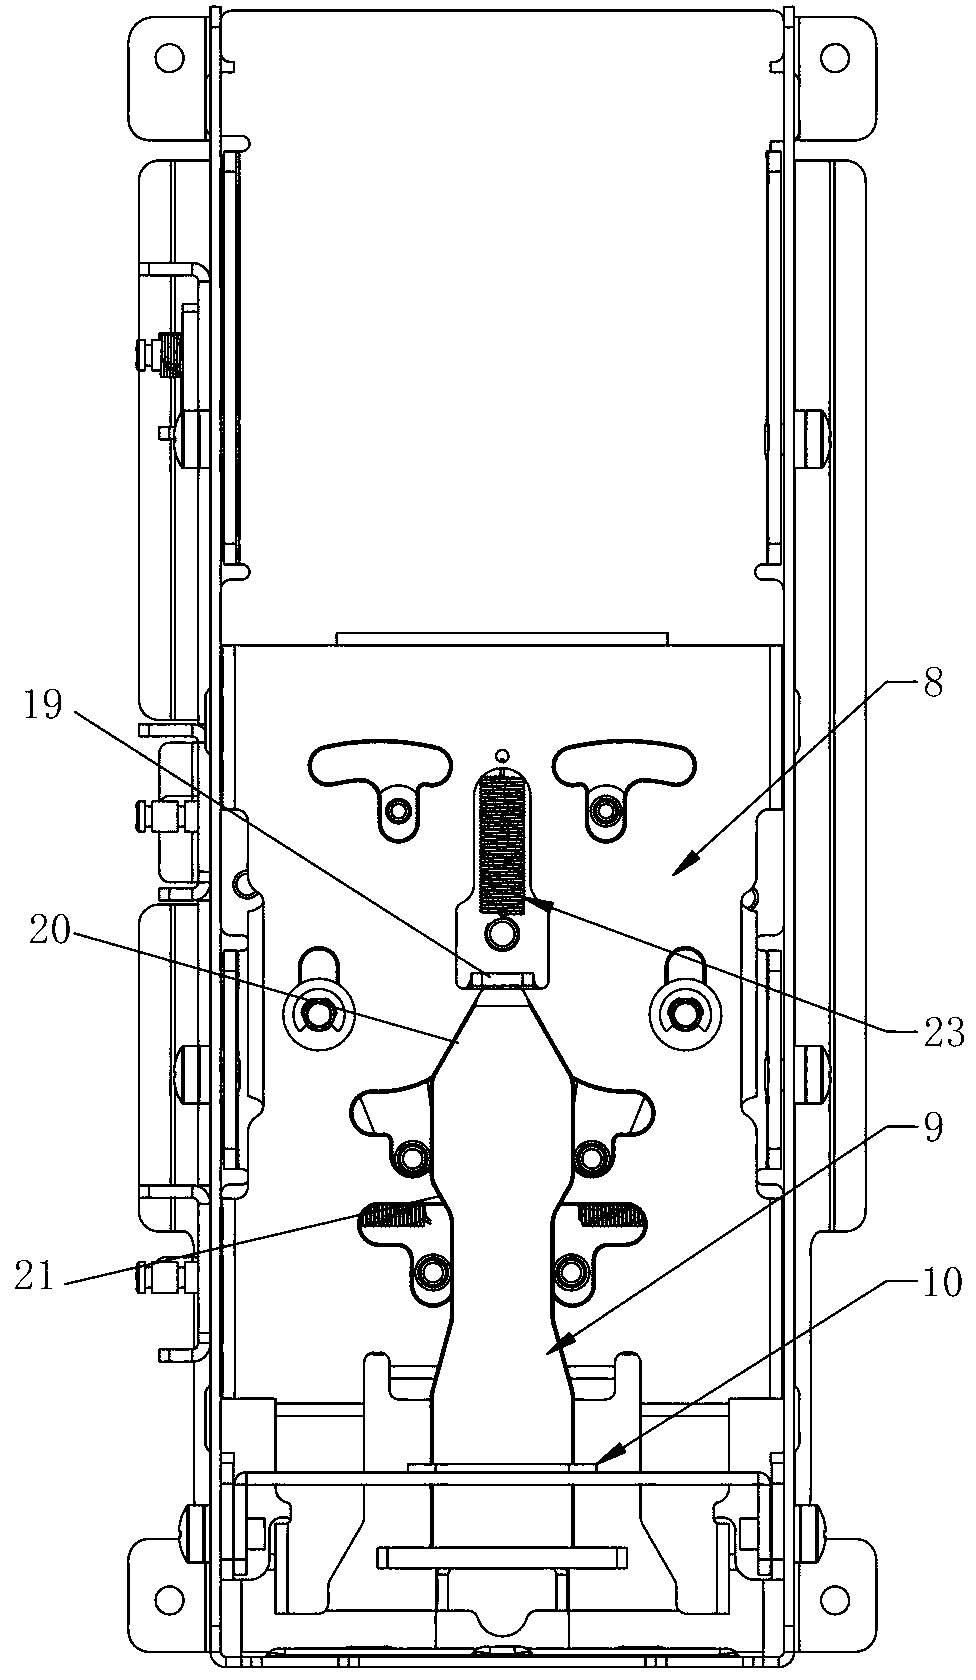 Control mechanism of card box gate